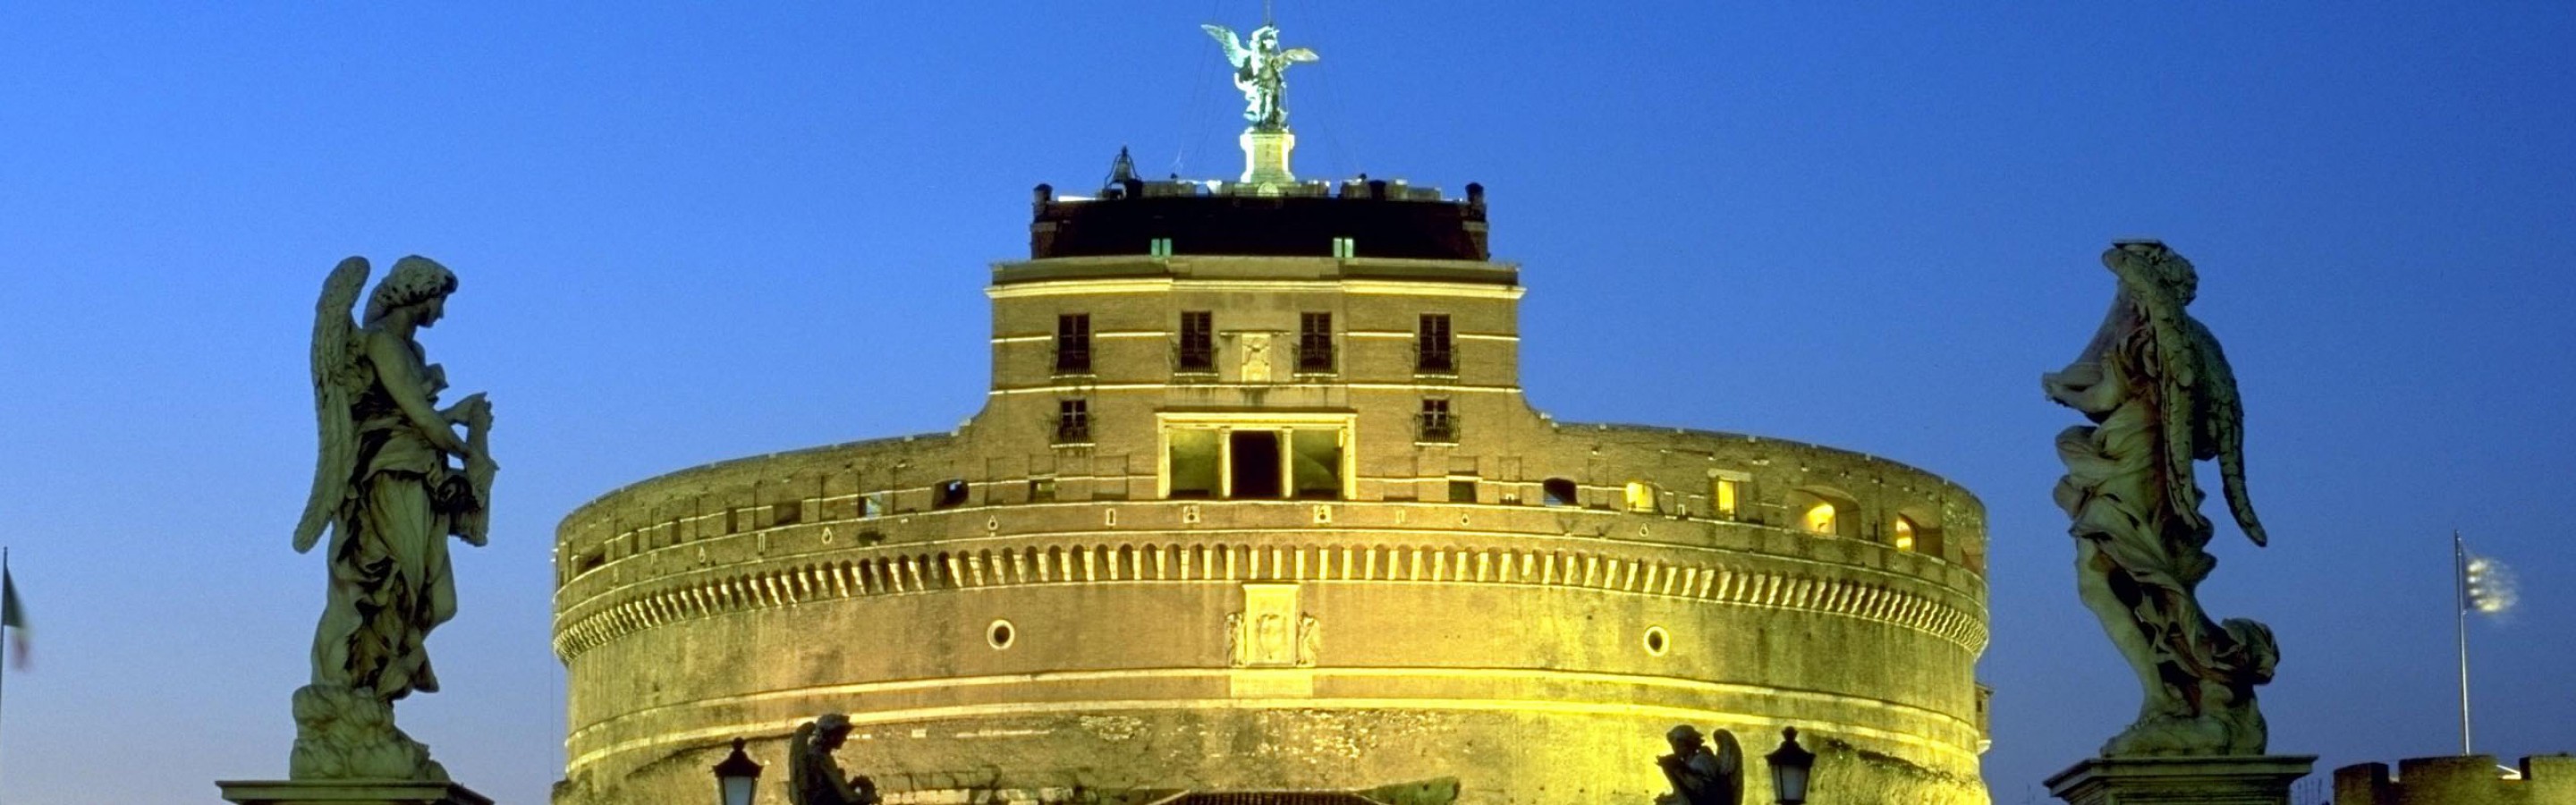 Castel Sant Angelo 2880x900